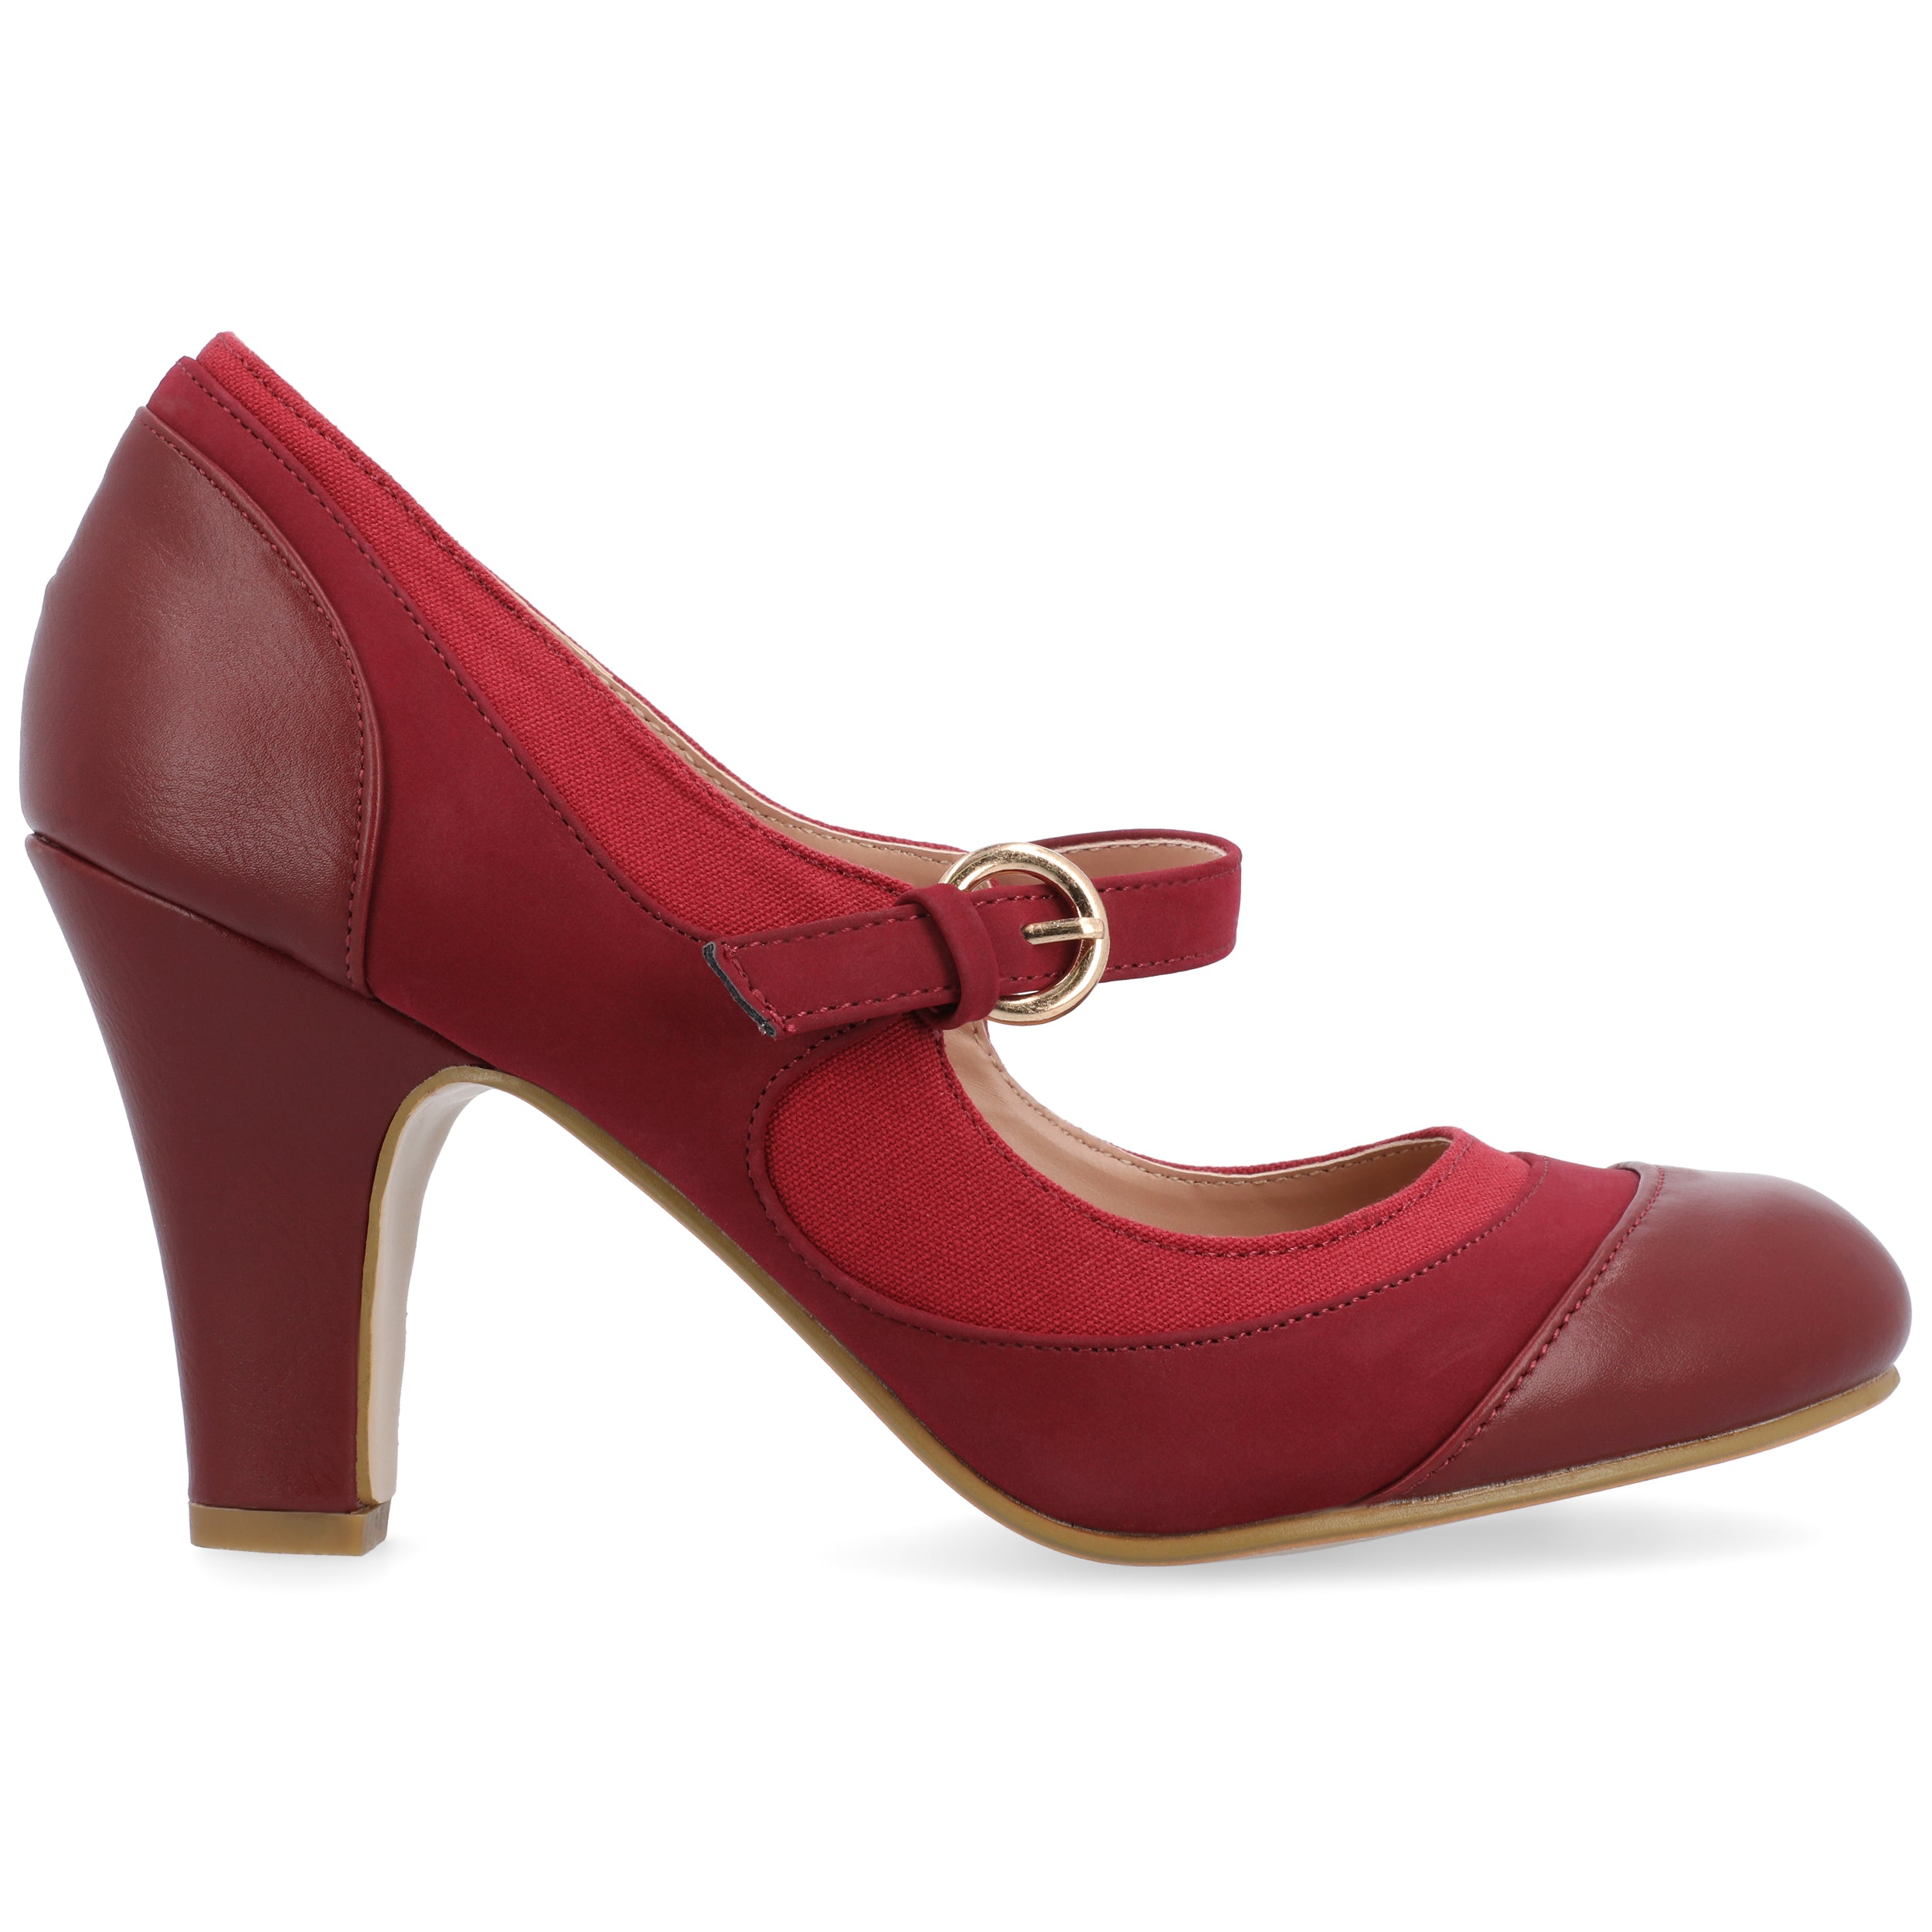 Unique Vintage 1970s Red Patent Leatherette Mary Jane Heels